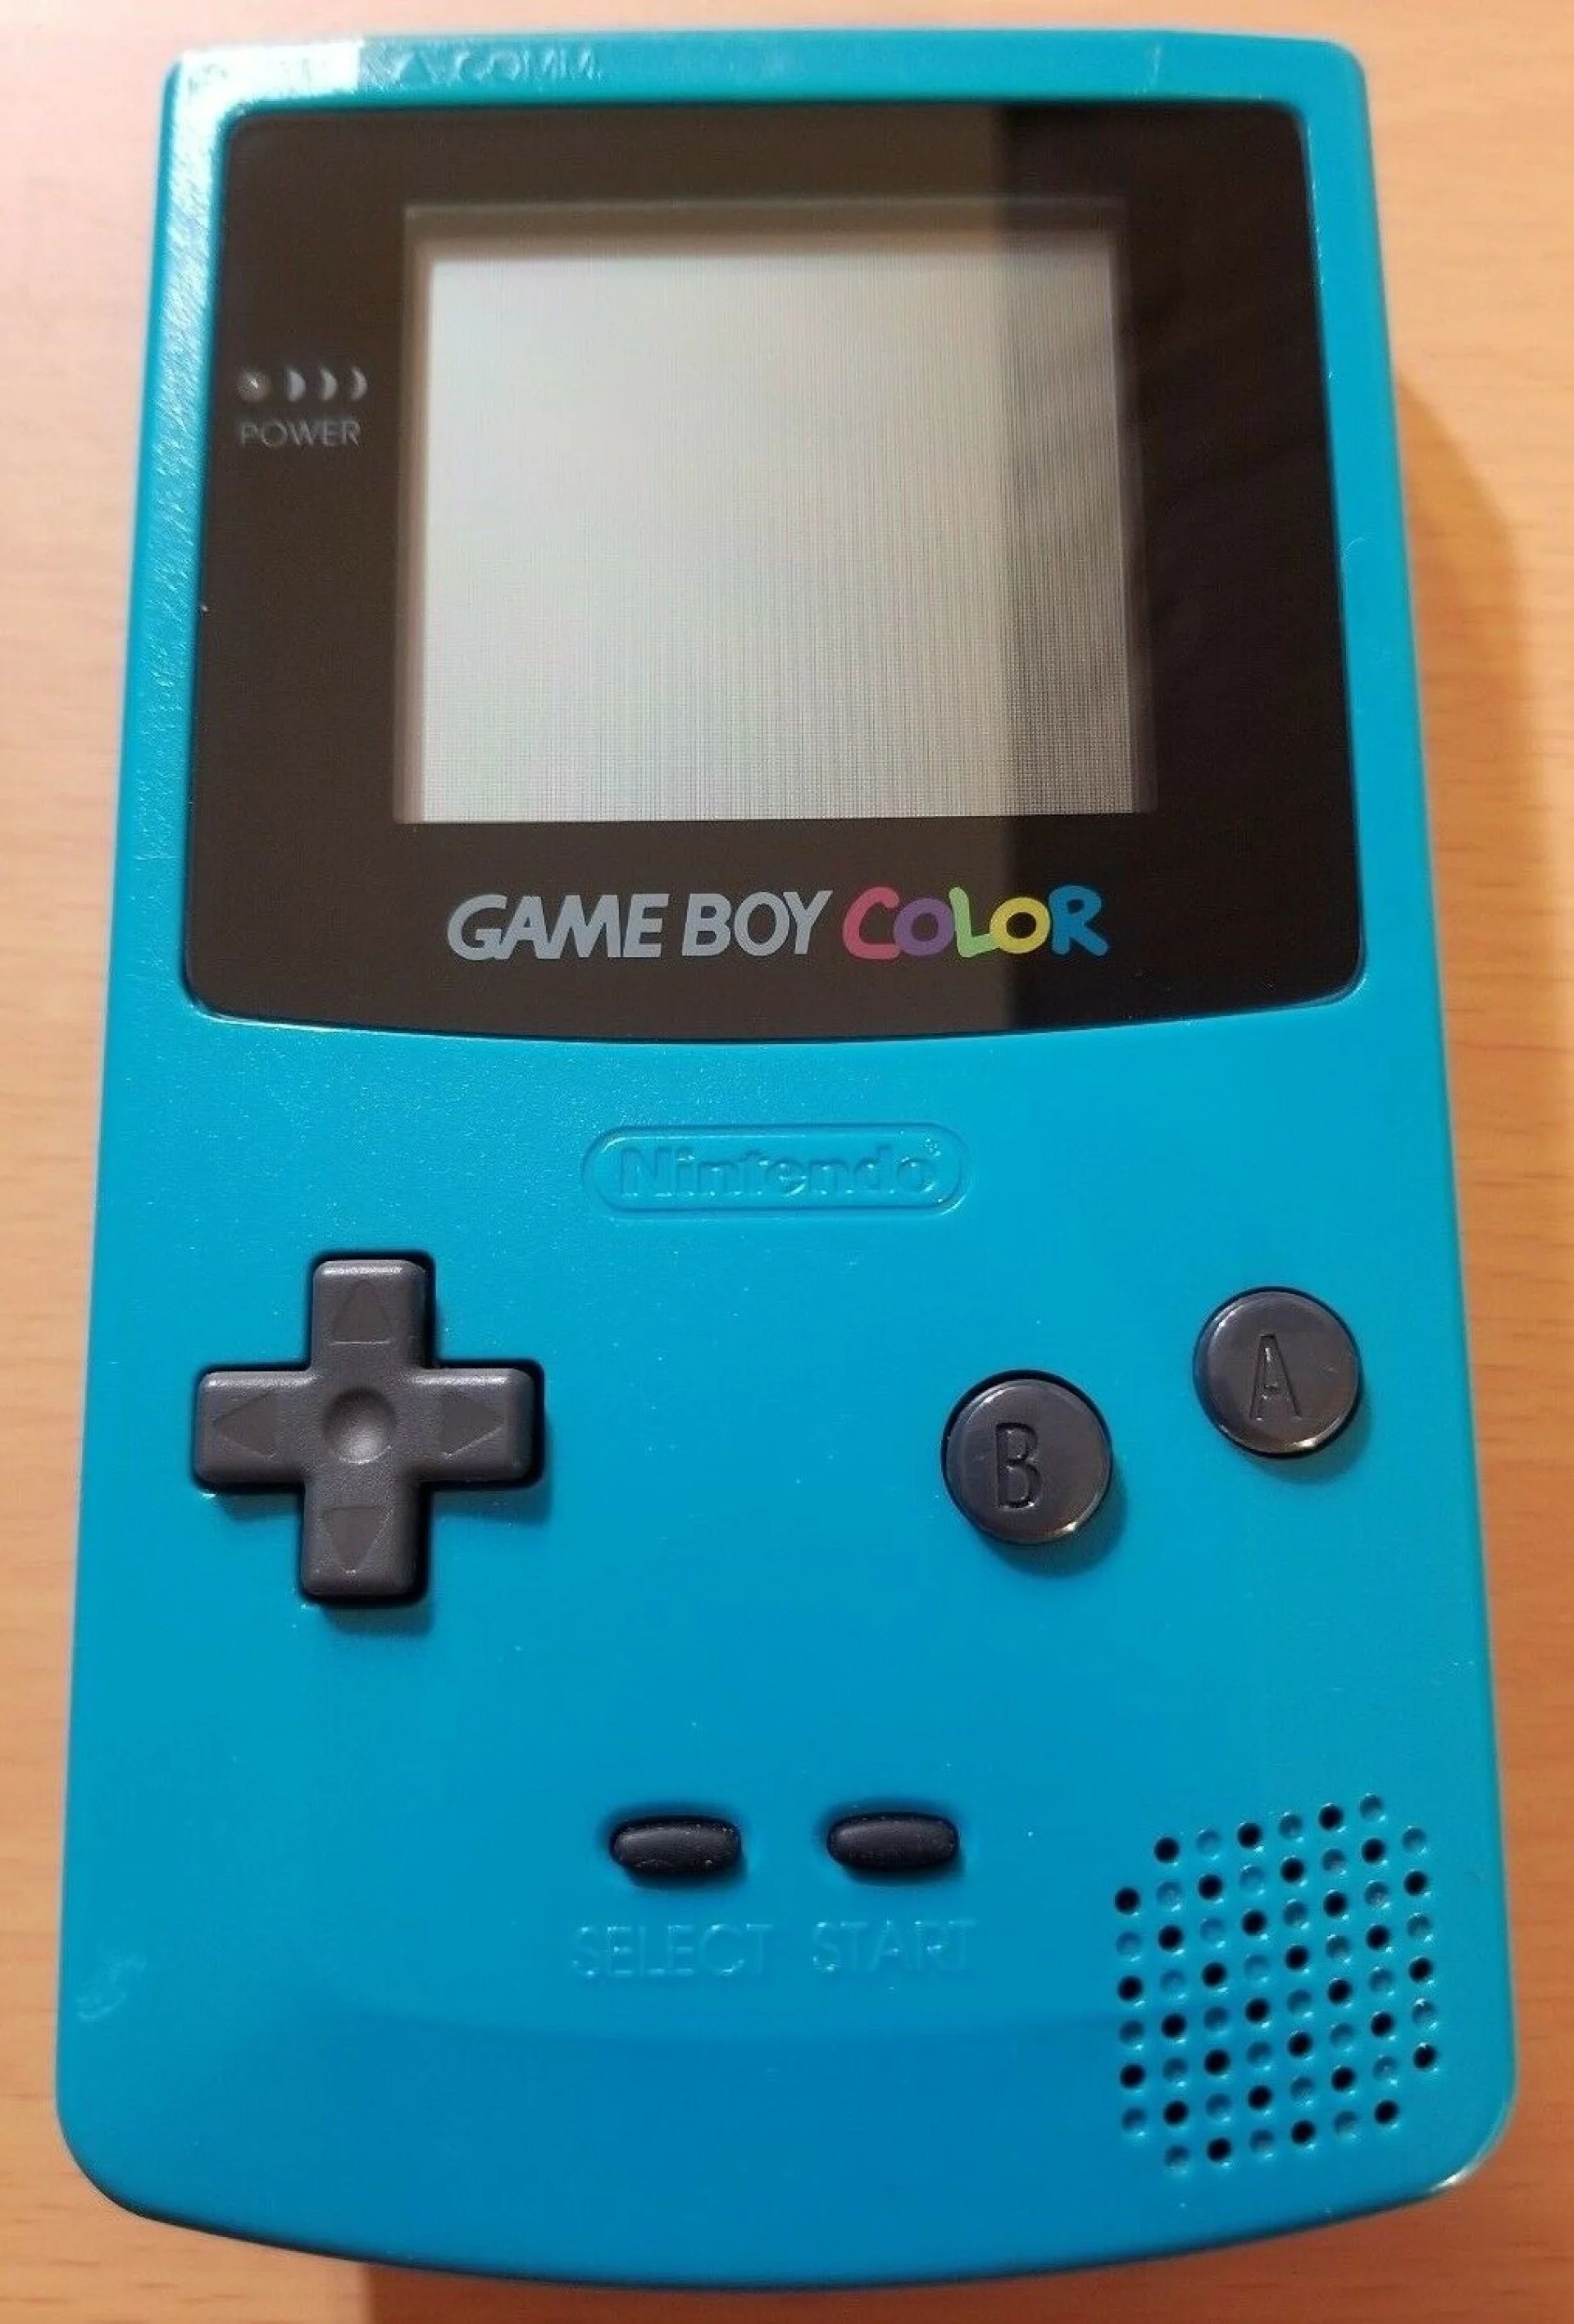 Game boy Color. Цвета Нинтендо. Nintendo Color TV game. Sexualize Nintendo.